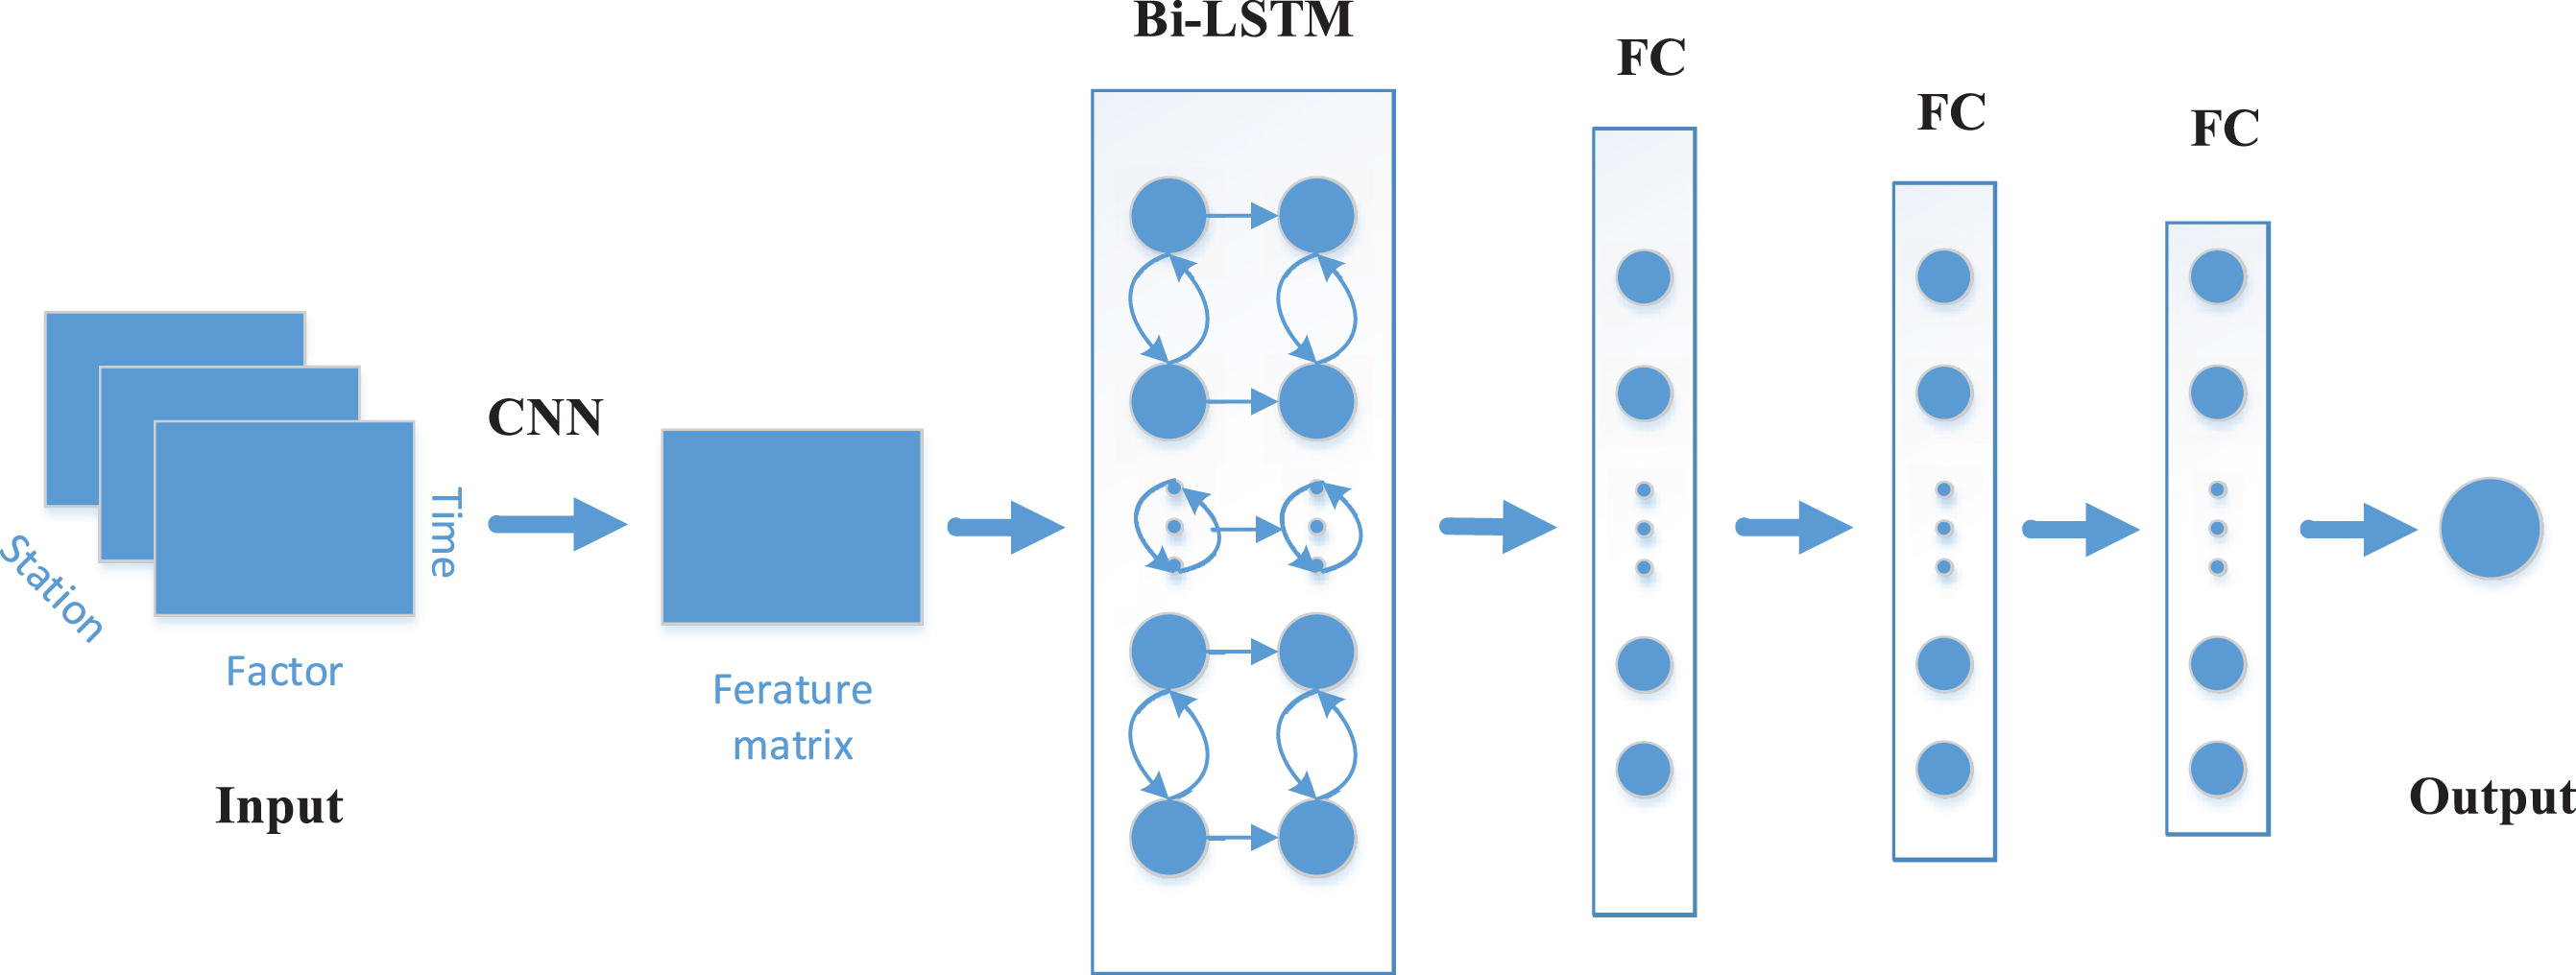 CNN+BiLSTM network structure diagram.